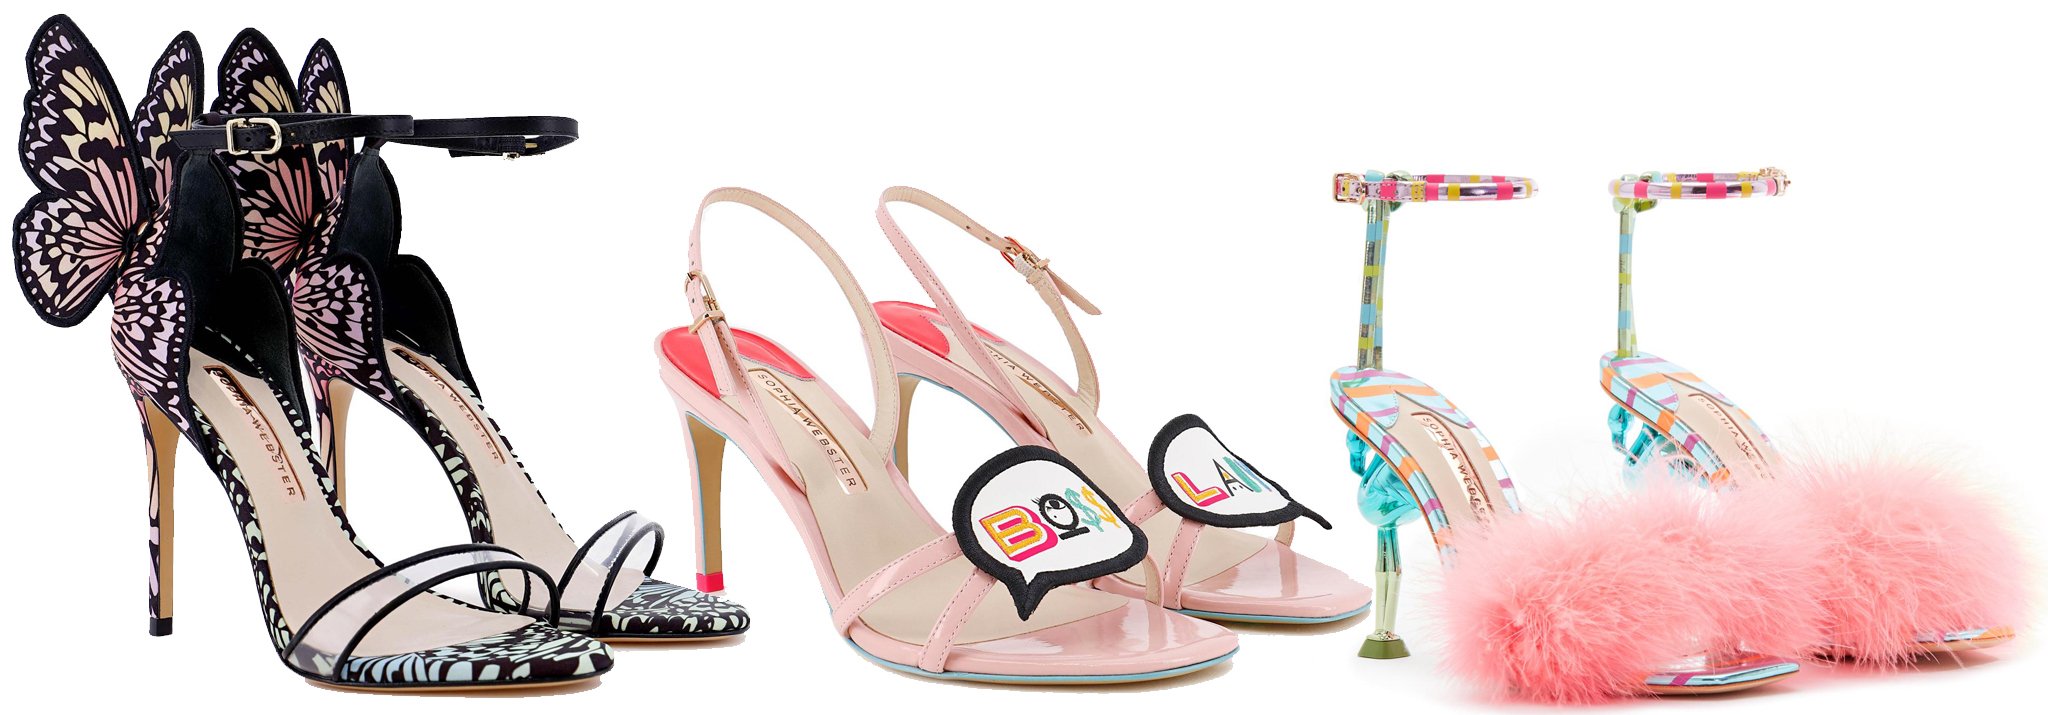 Sophia Webster Chiara Sandals, $850; Sophia Webster Boss Lady Mid Sandals, $560; Sophia Webster Flo Flamingo Sandals, $700